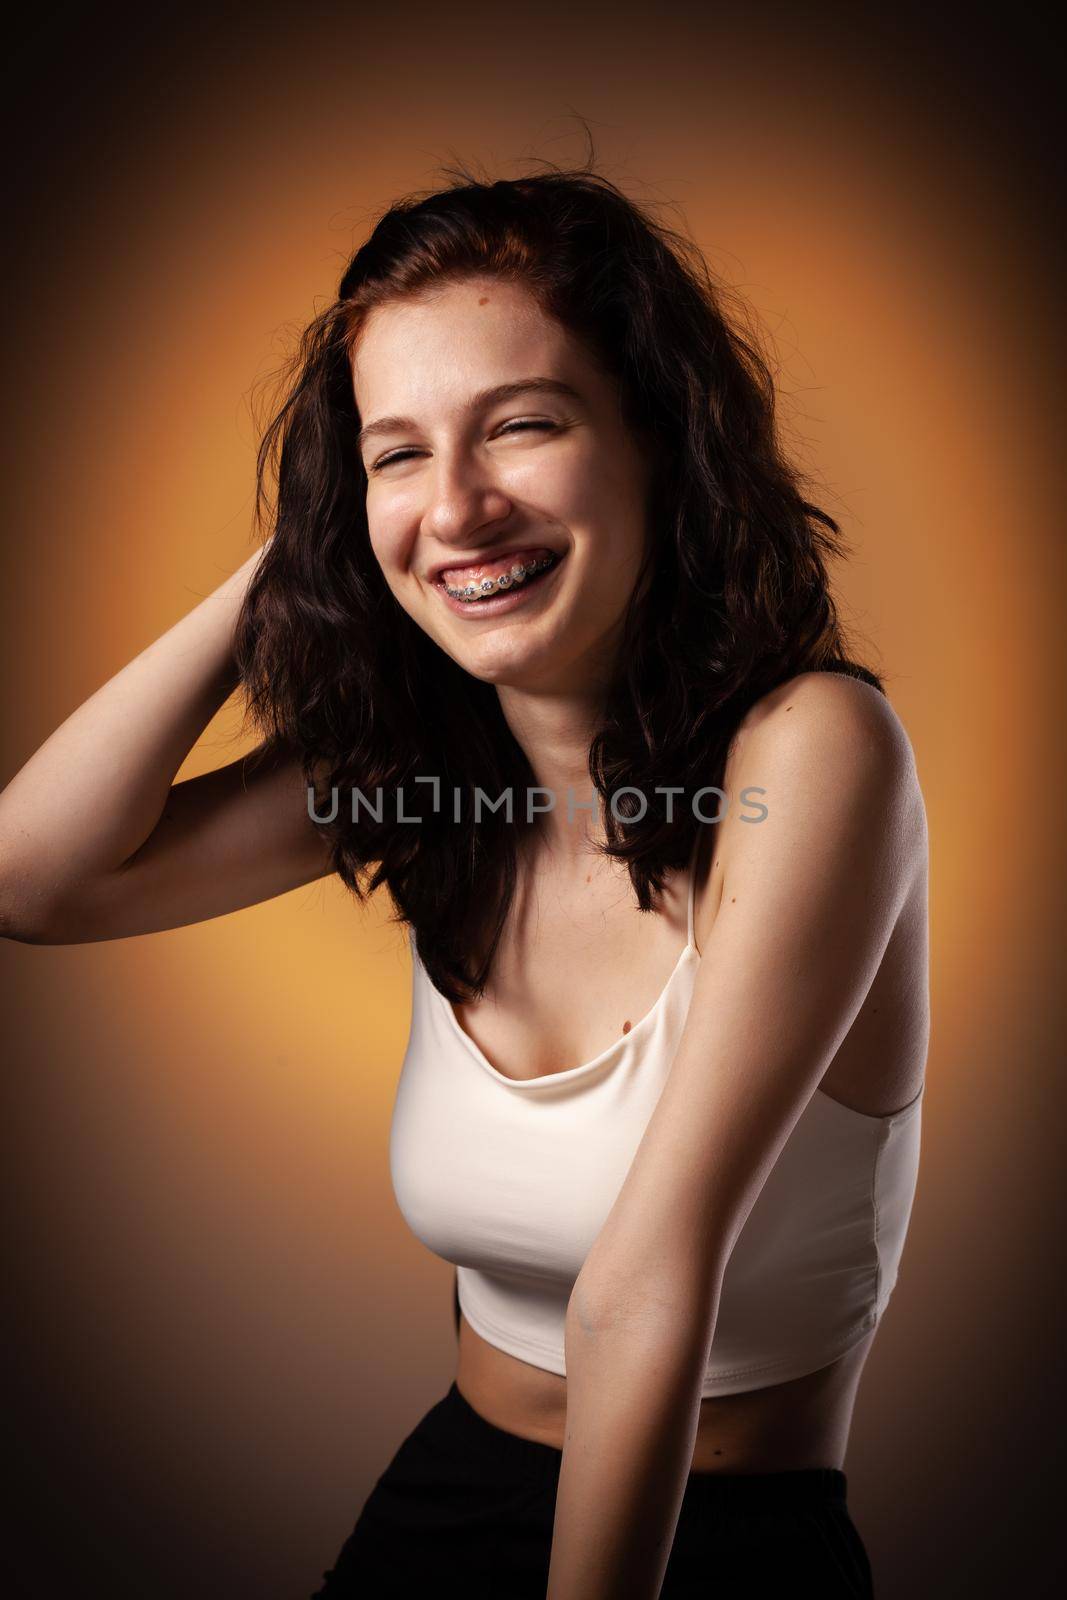 Teenage girl with dental braces. Studio portrait on neon orange colored background.